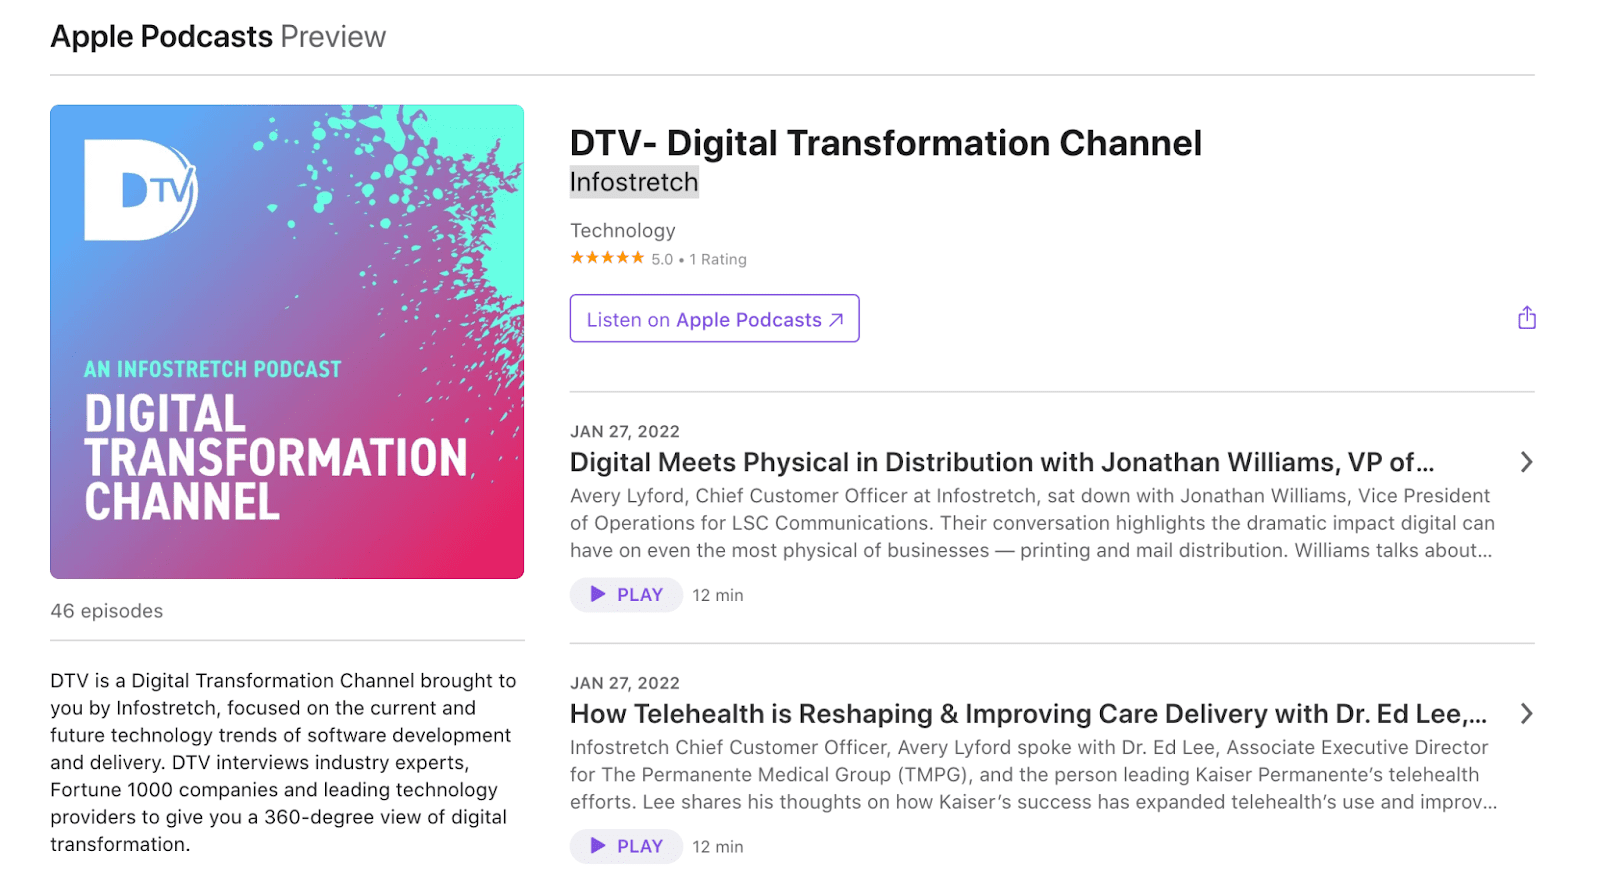 DTV - Digital Transformation Channel